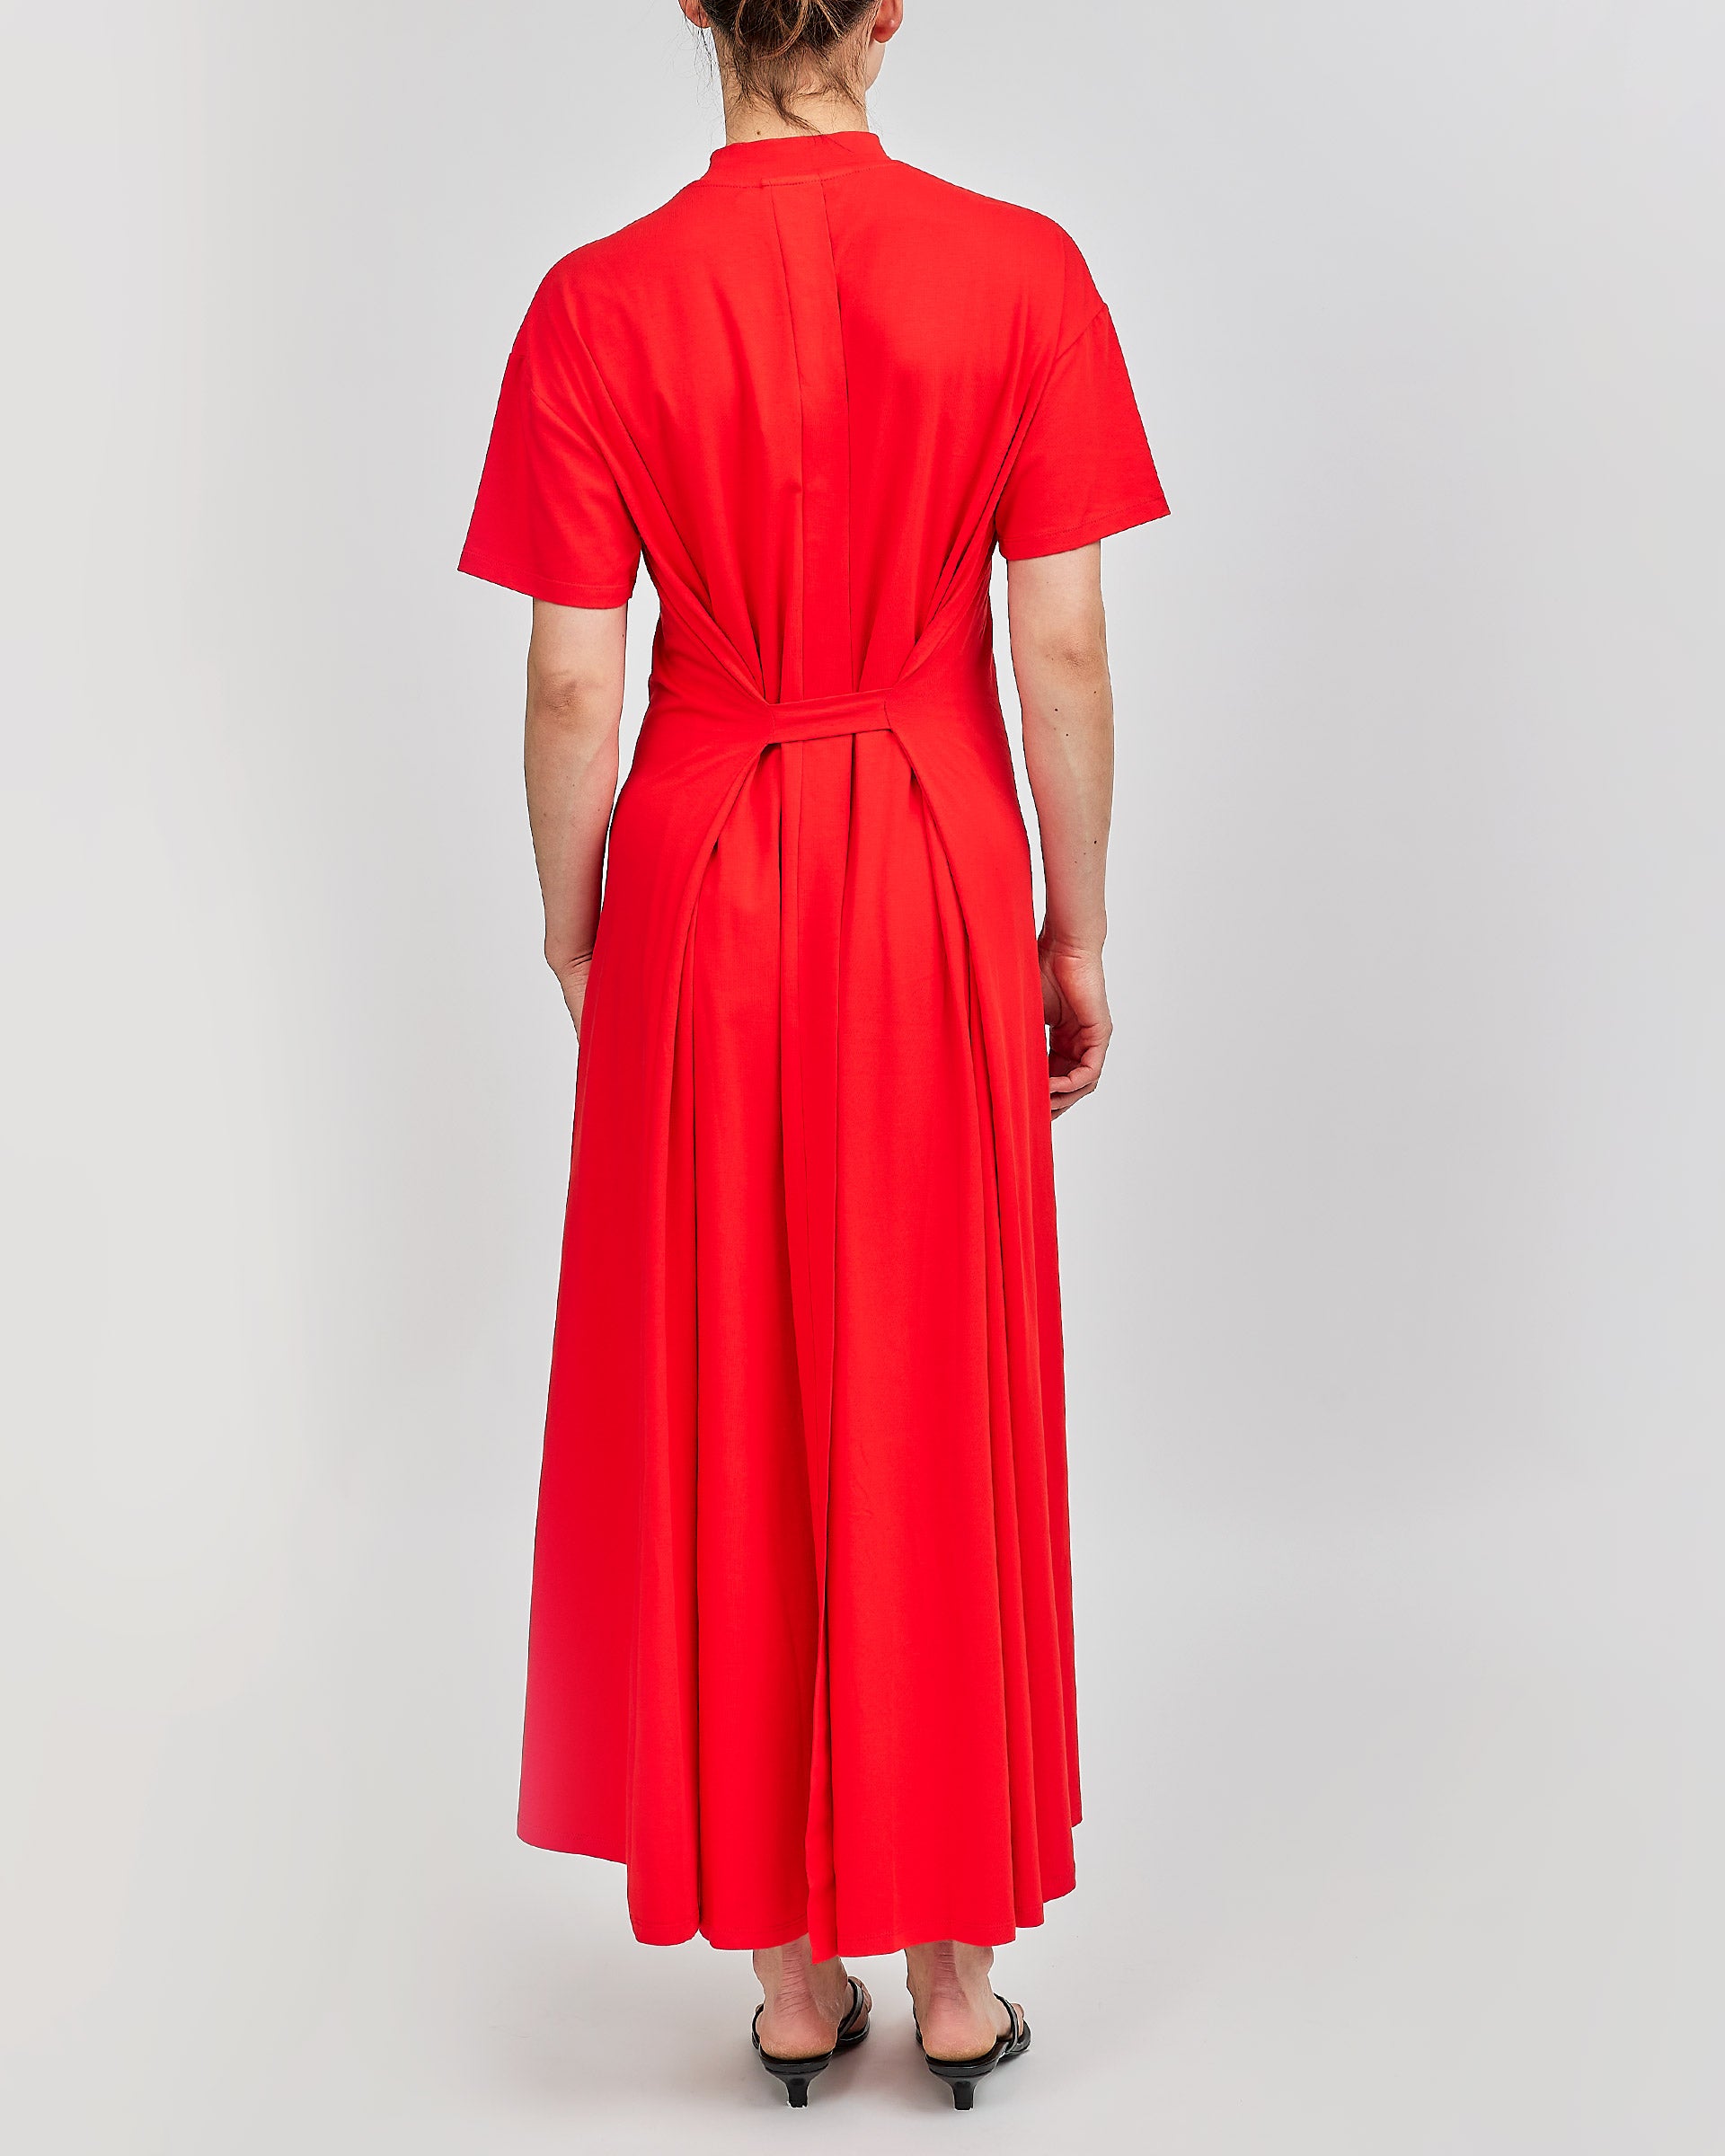 Proenza Schouler White Label Noelle Dress Red